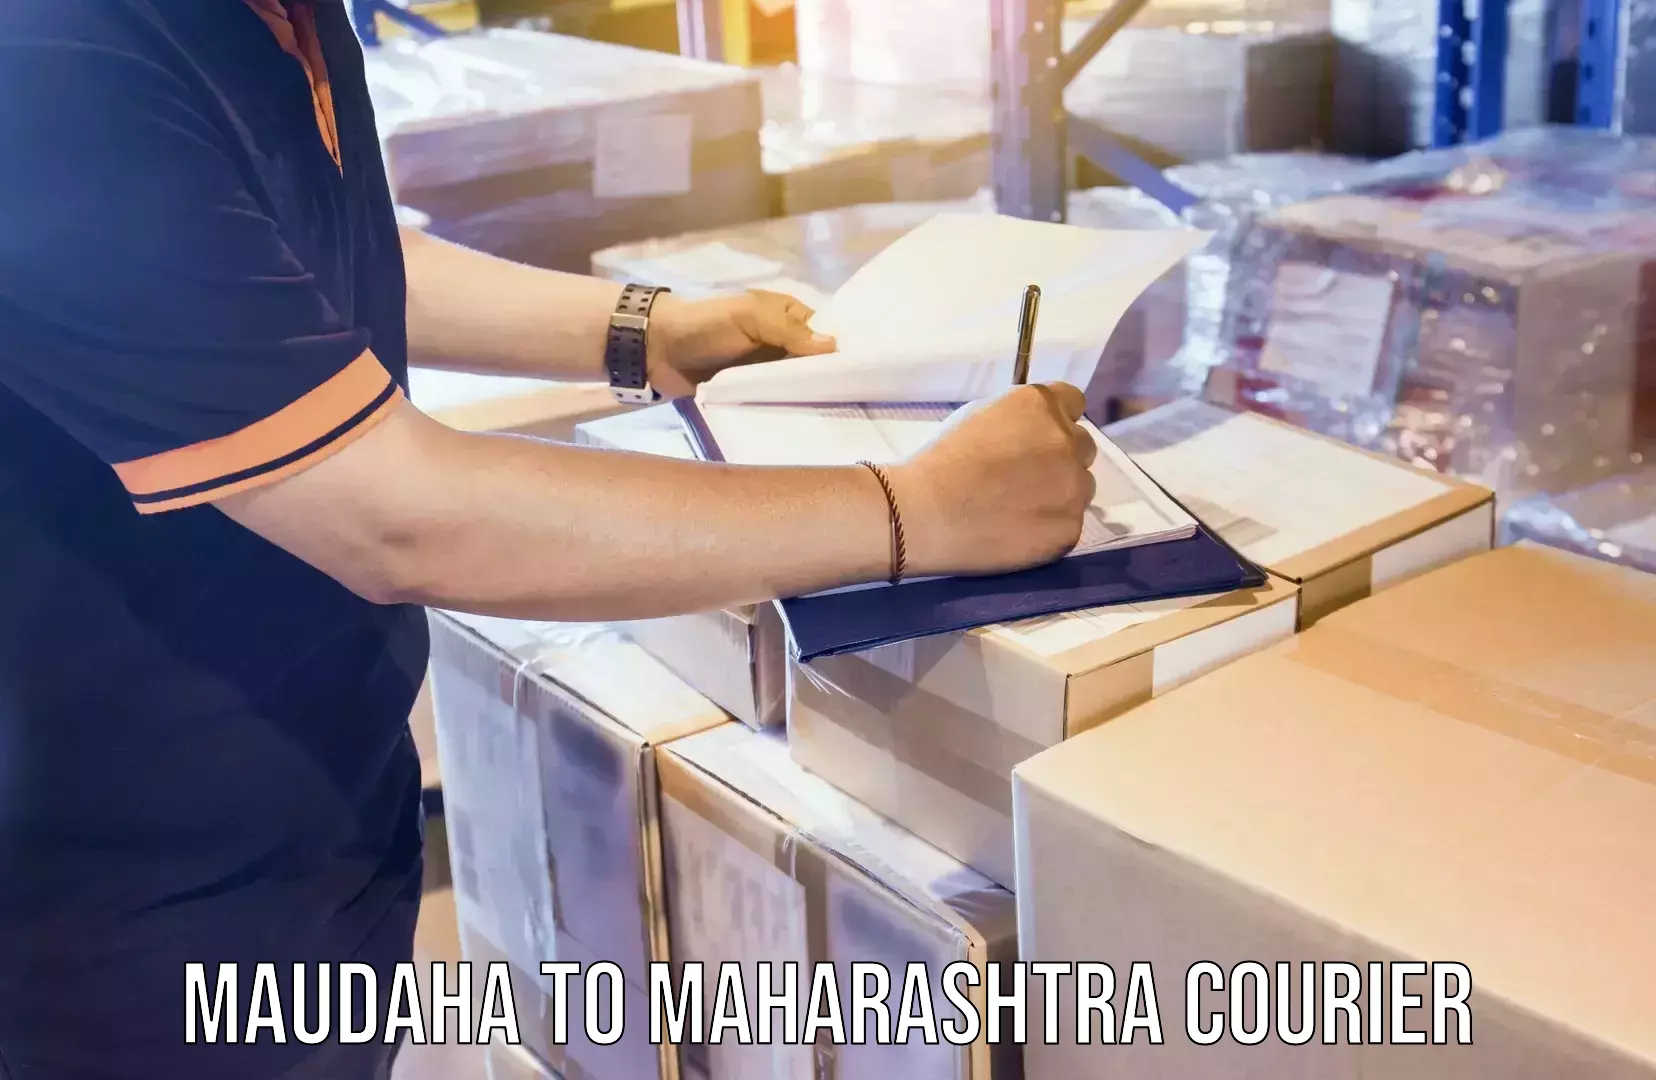 Seamless moving process Maudaha to Maharashtra